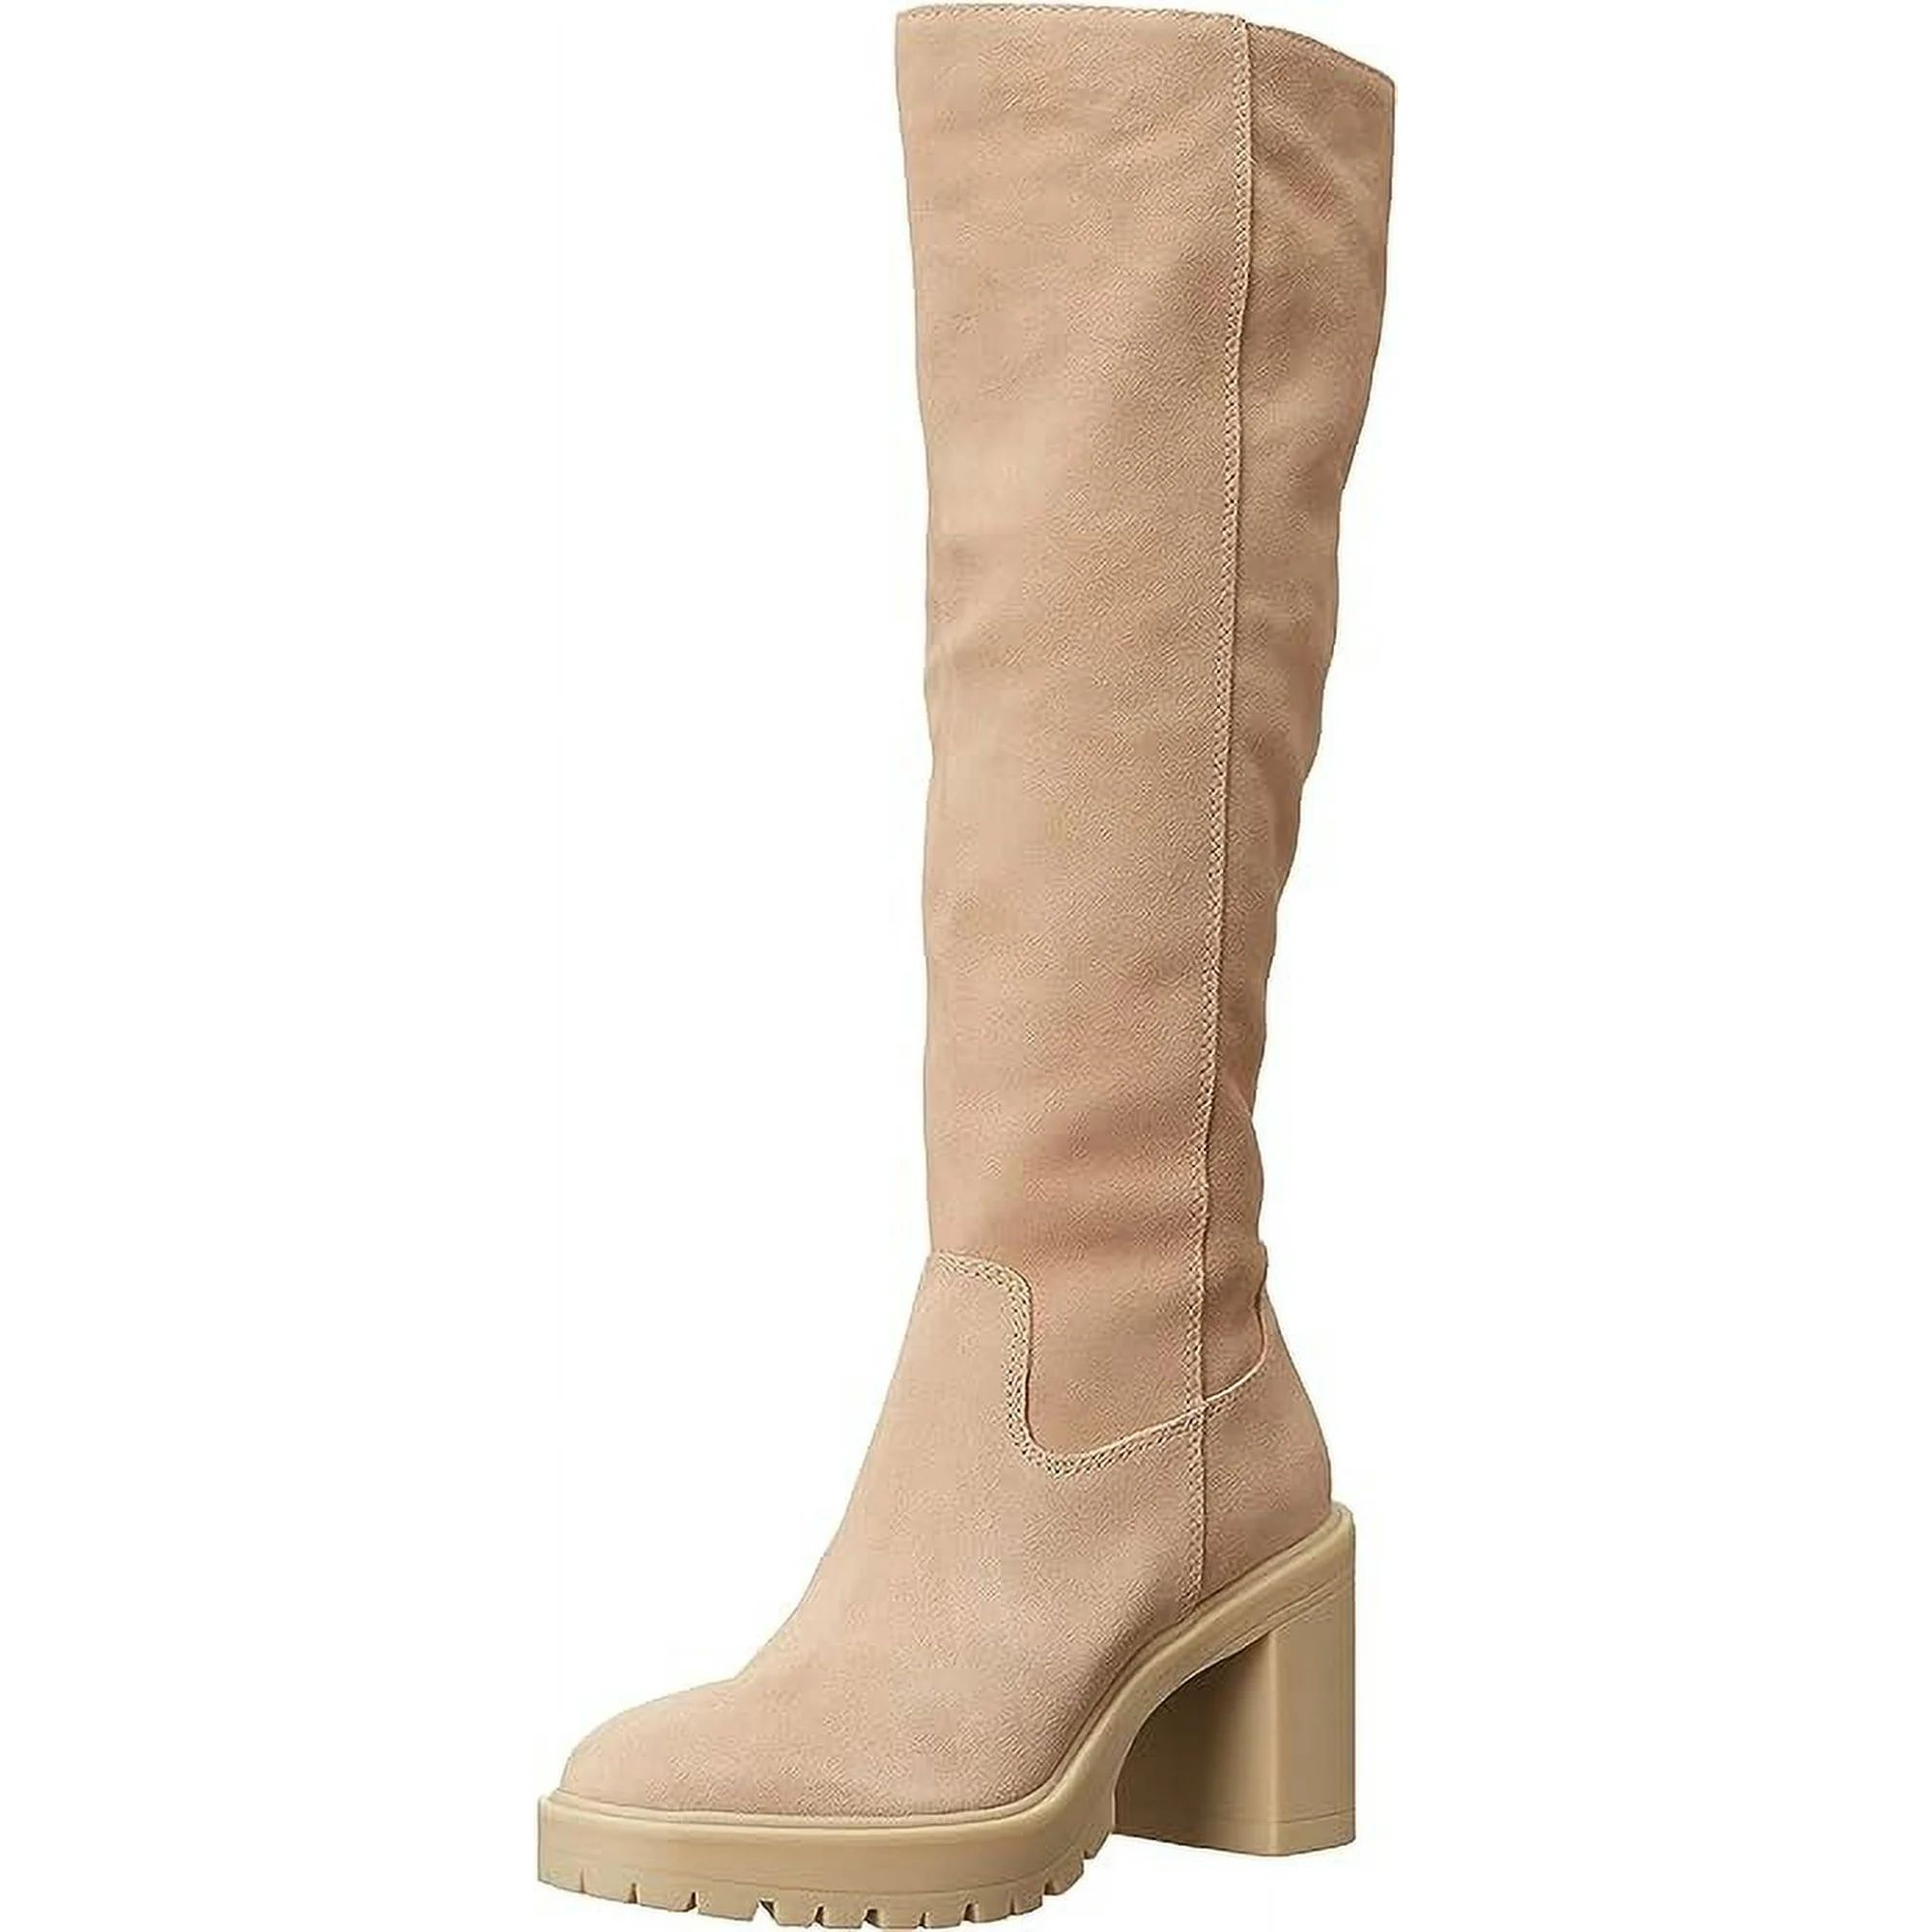 Dolce Vita Corry H2O Dune Suede Block Heel Almond Toe Knee High Fashion Boots (Dune Suede, 8.5) | Walmart (US)